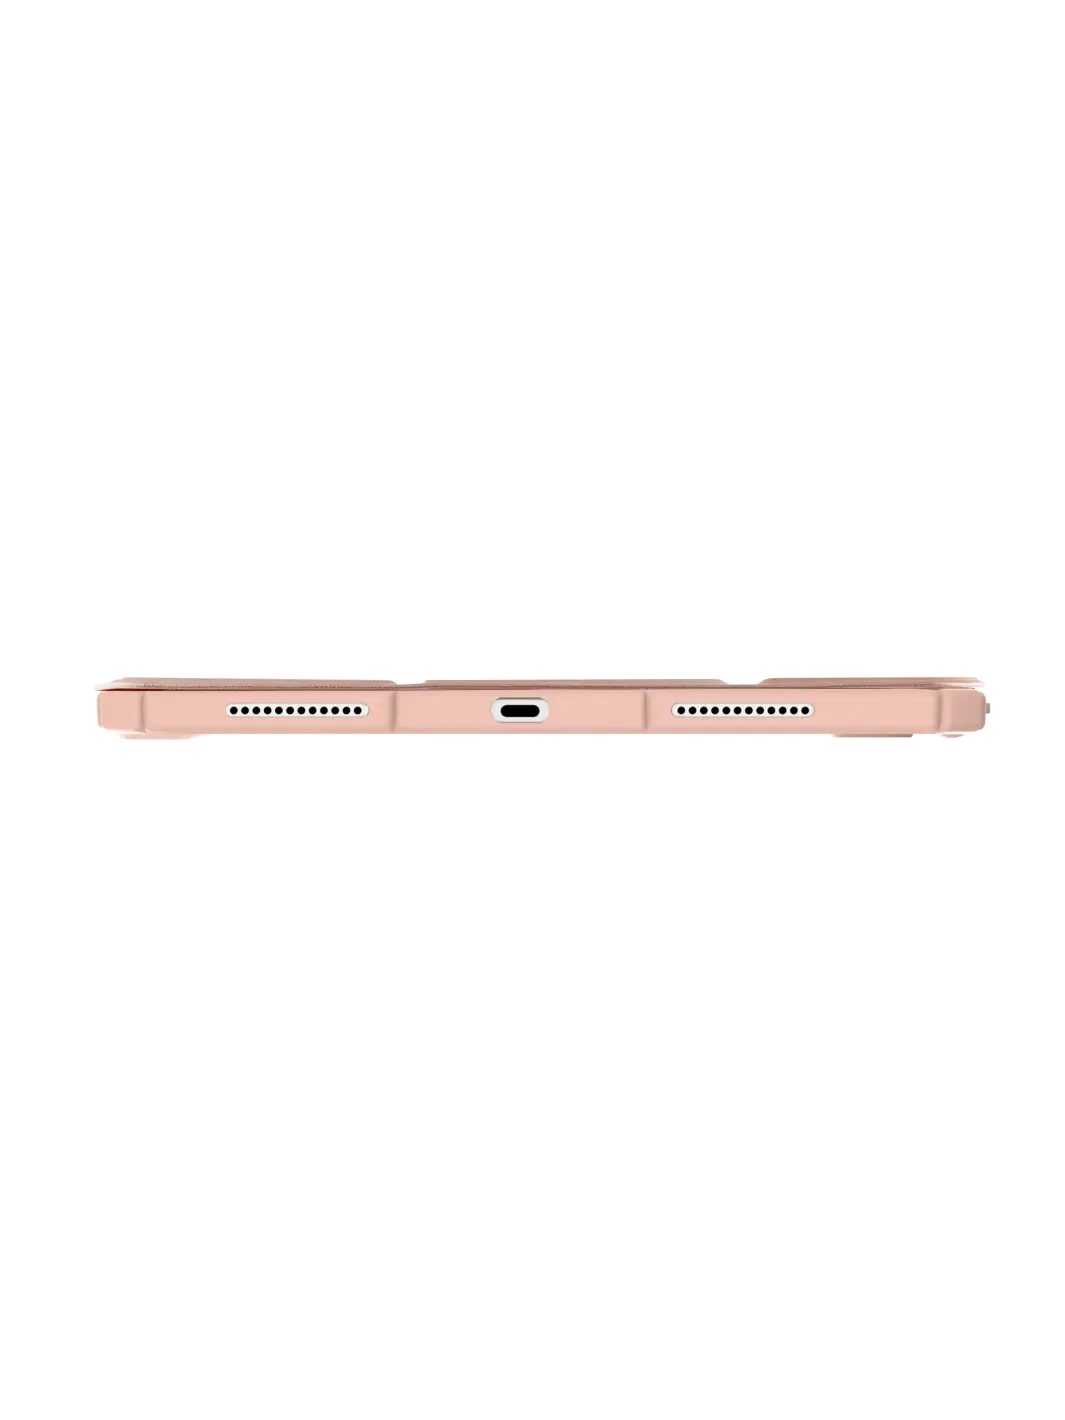 London Pink Sand iPad 10.9" (10th Gen) iPad Cases